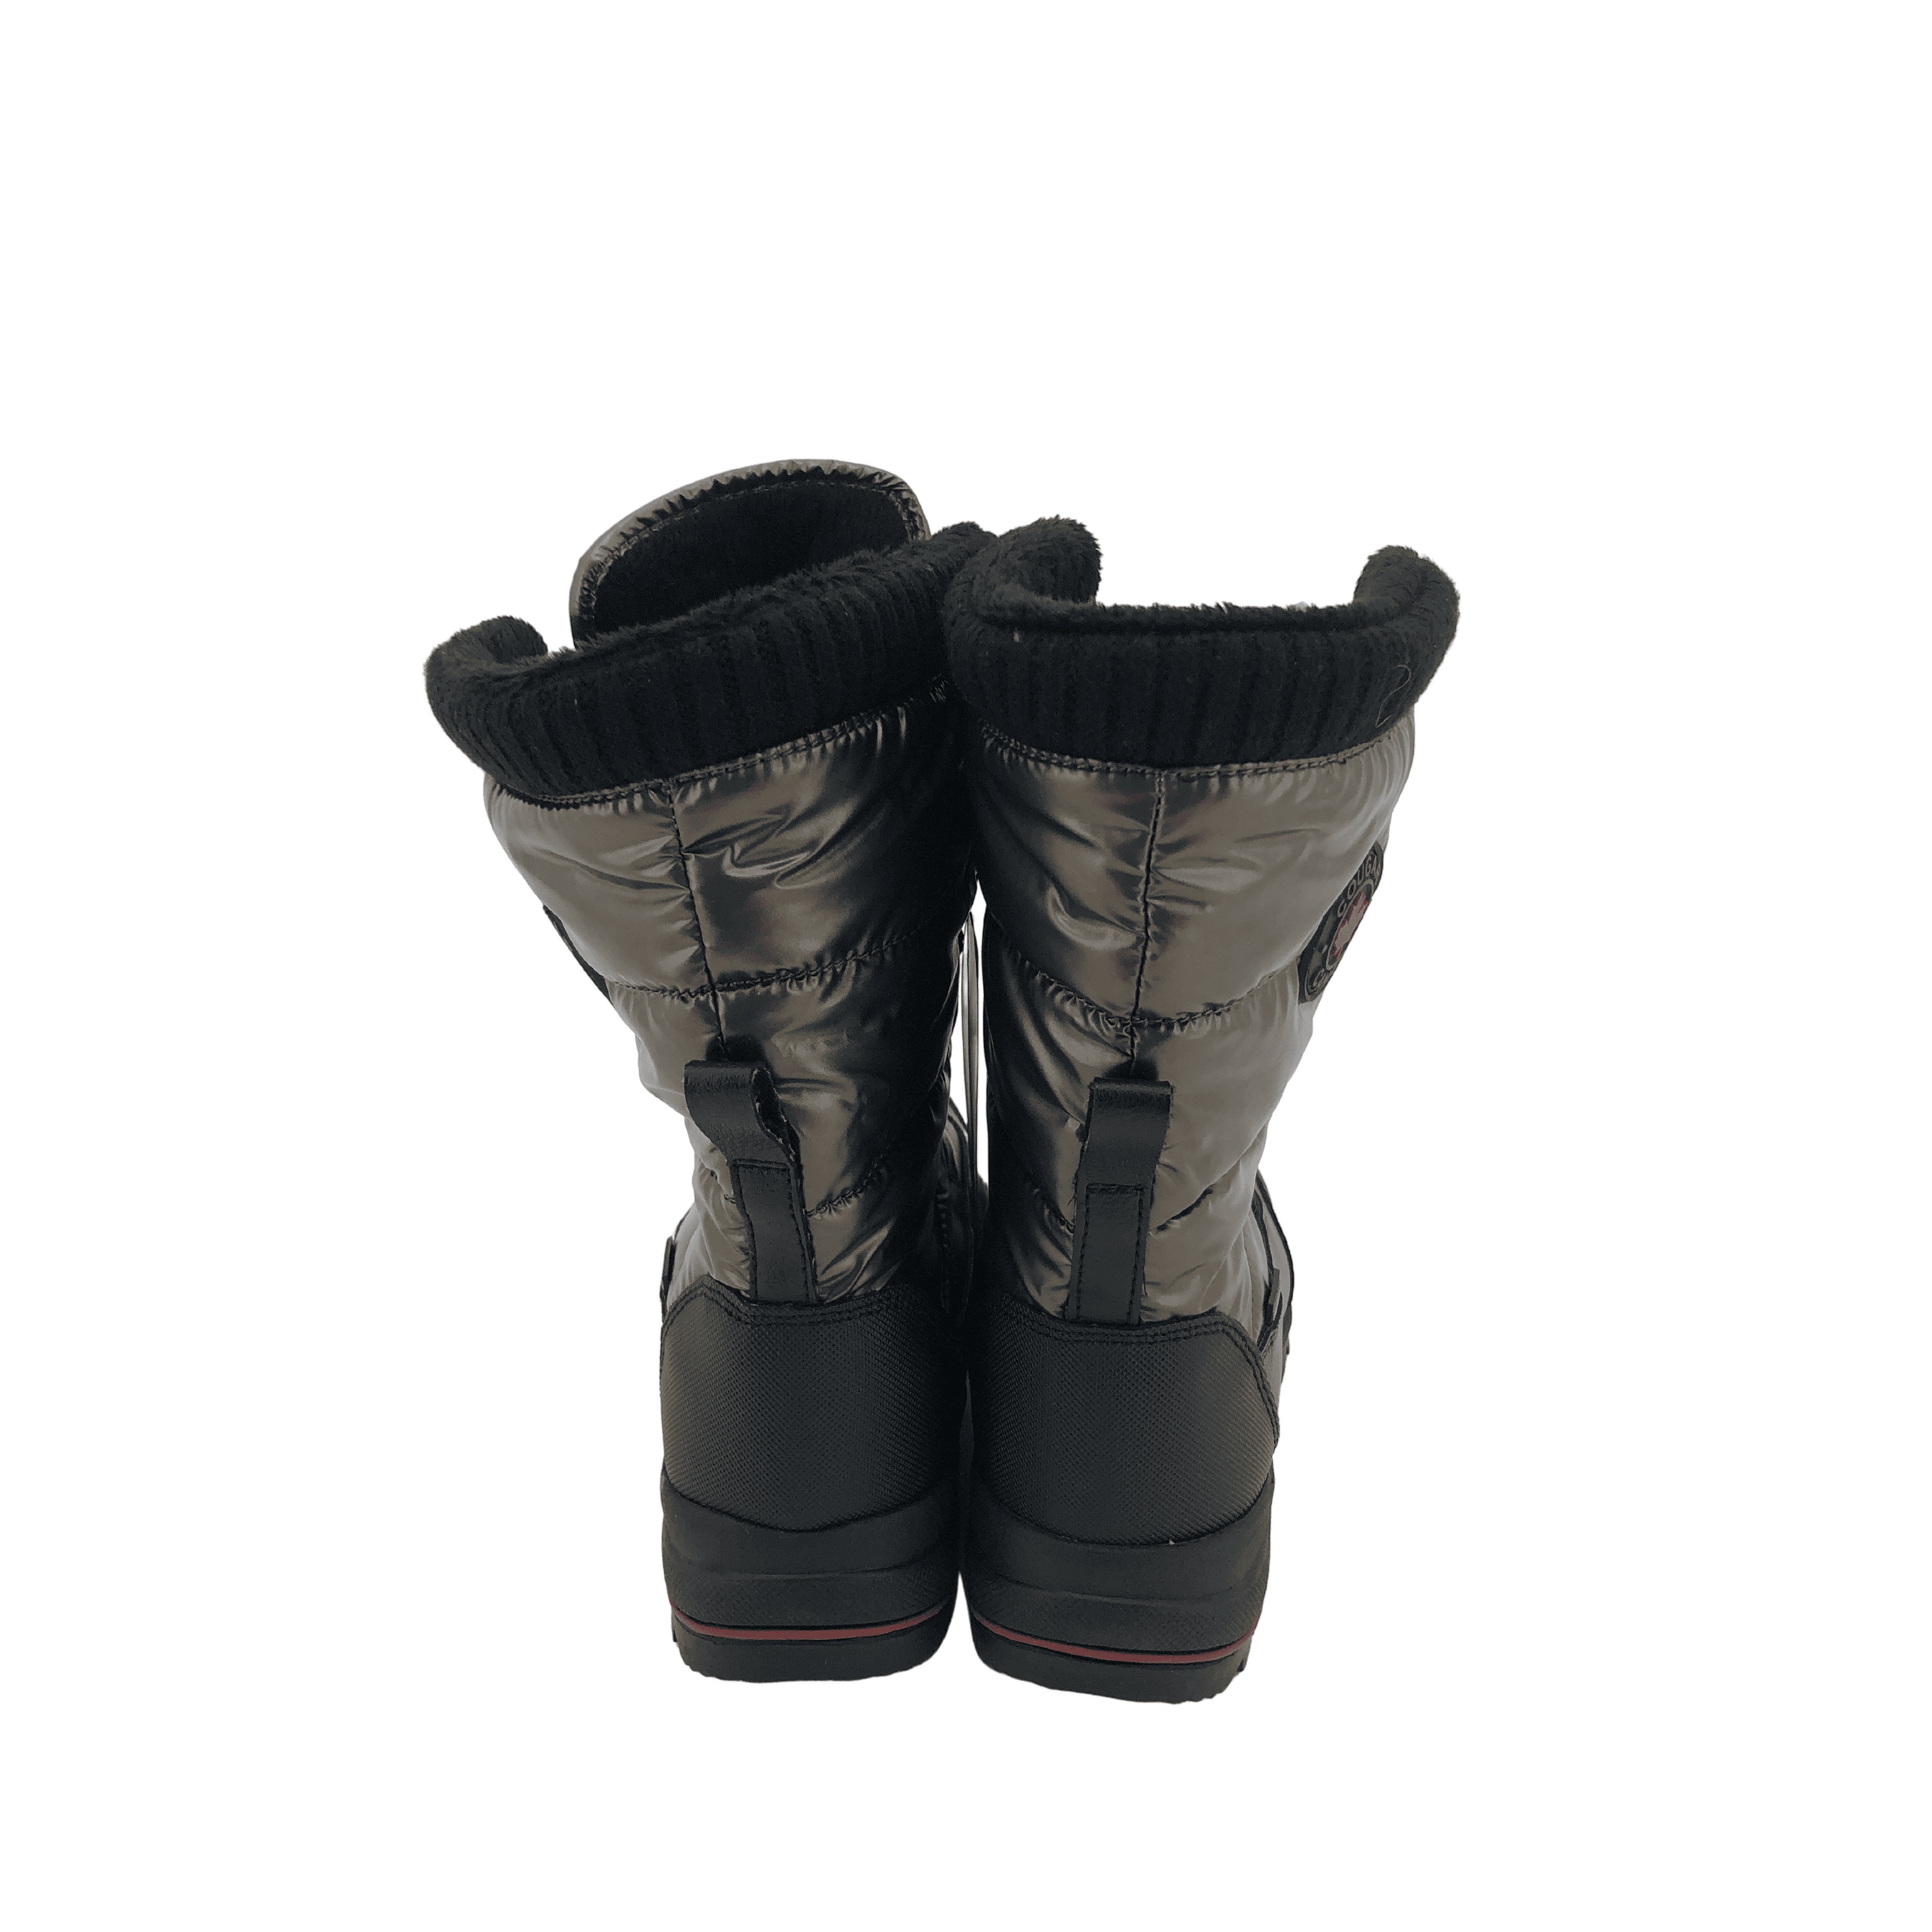 Cougar womens waerproof winter boots in bronze Size 7M